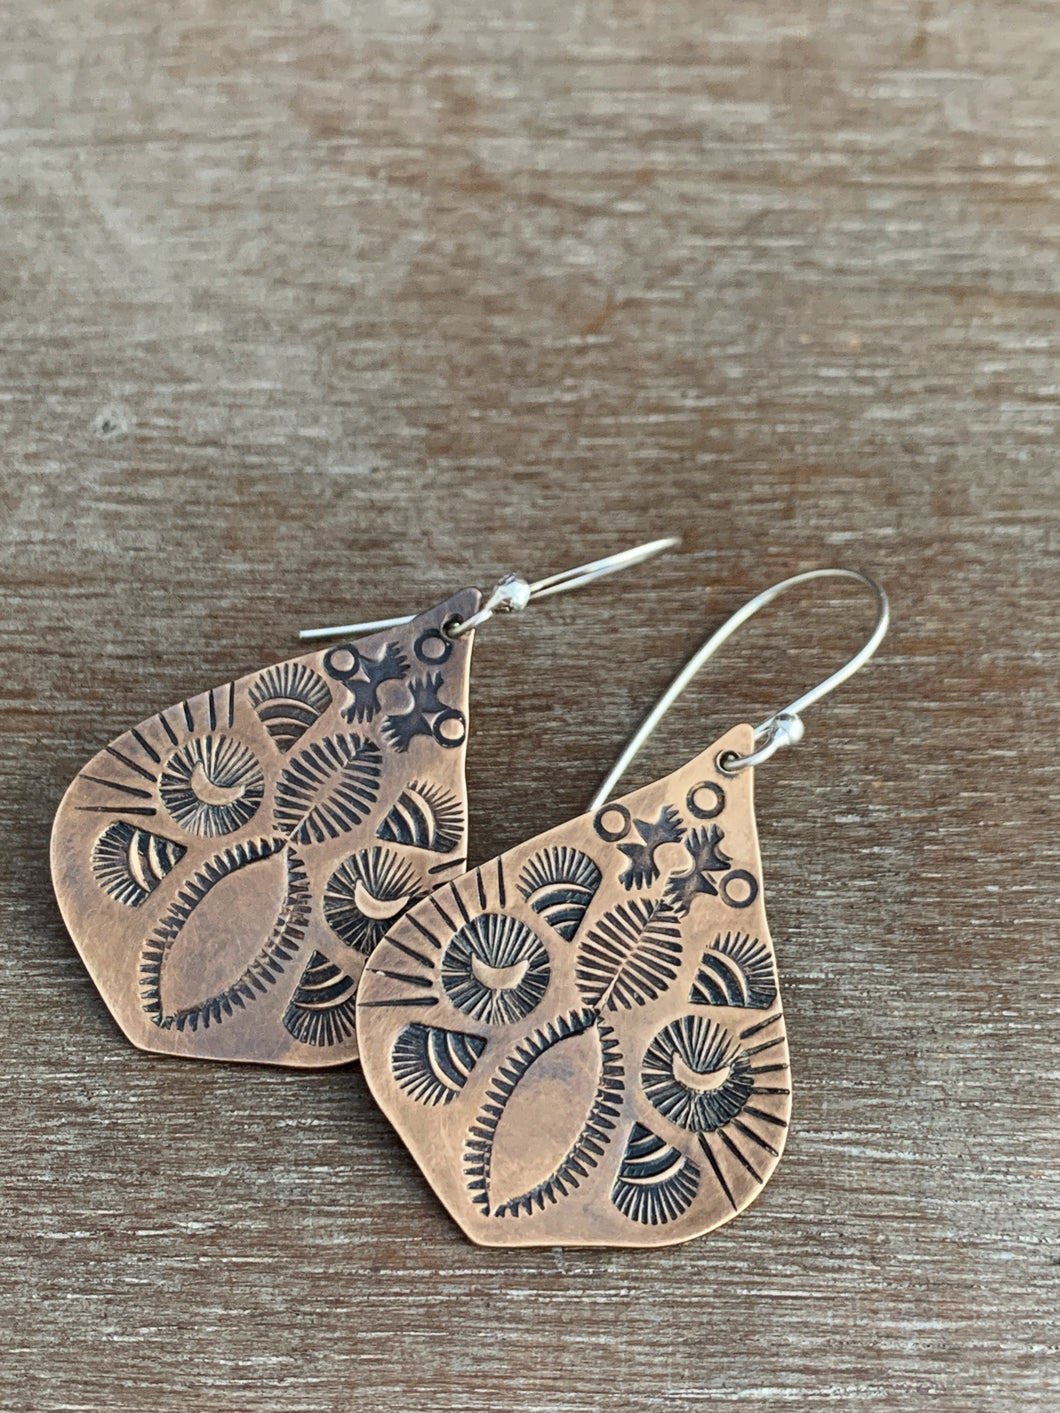 Stamped bronze earrings